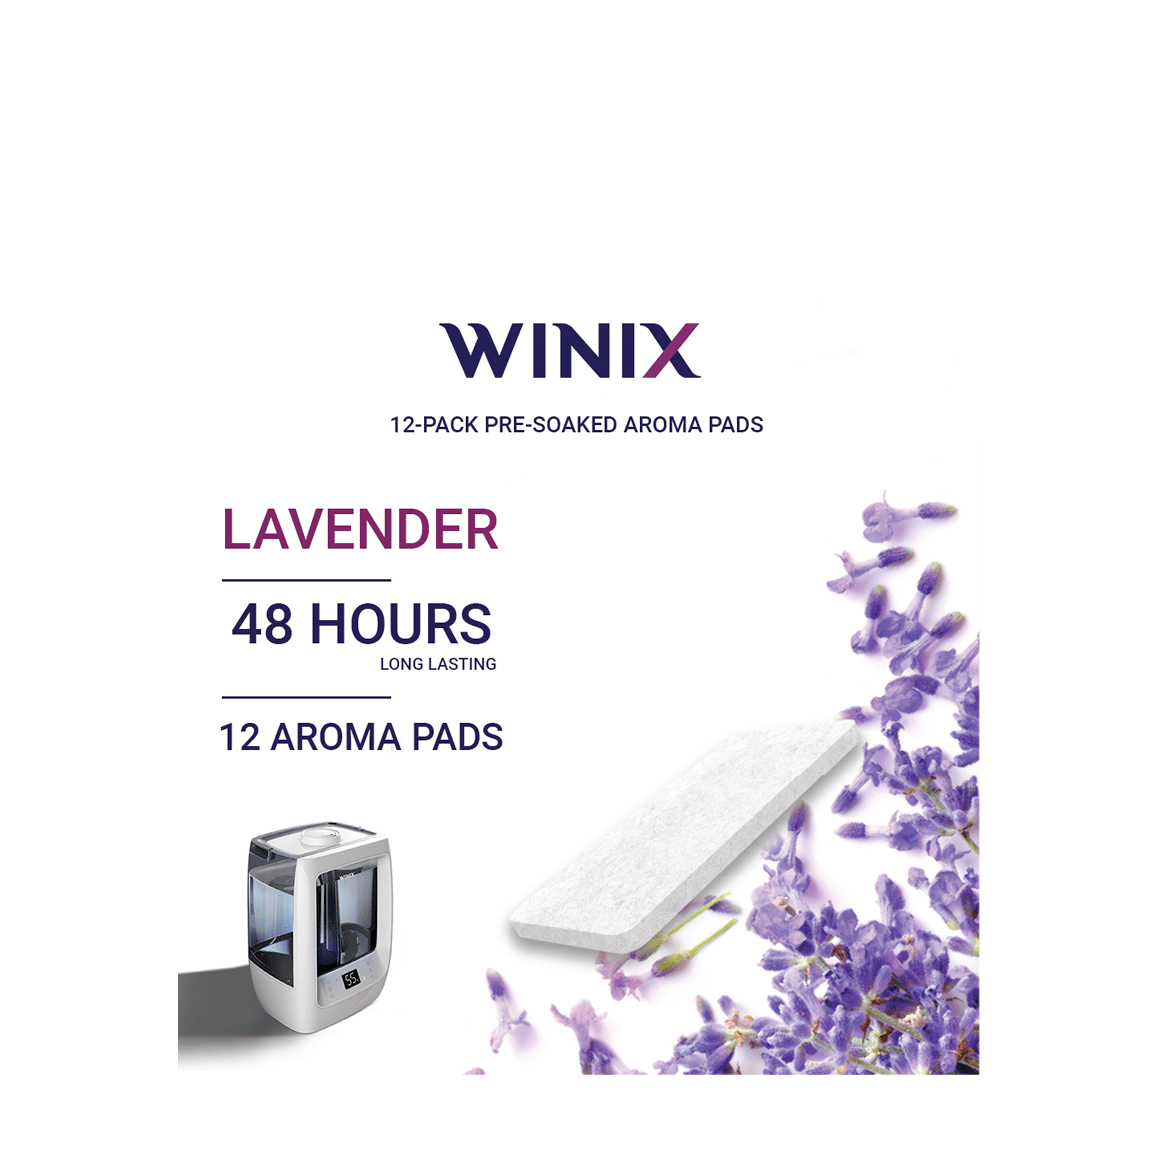 WINIX Lavender aroma pads